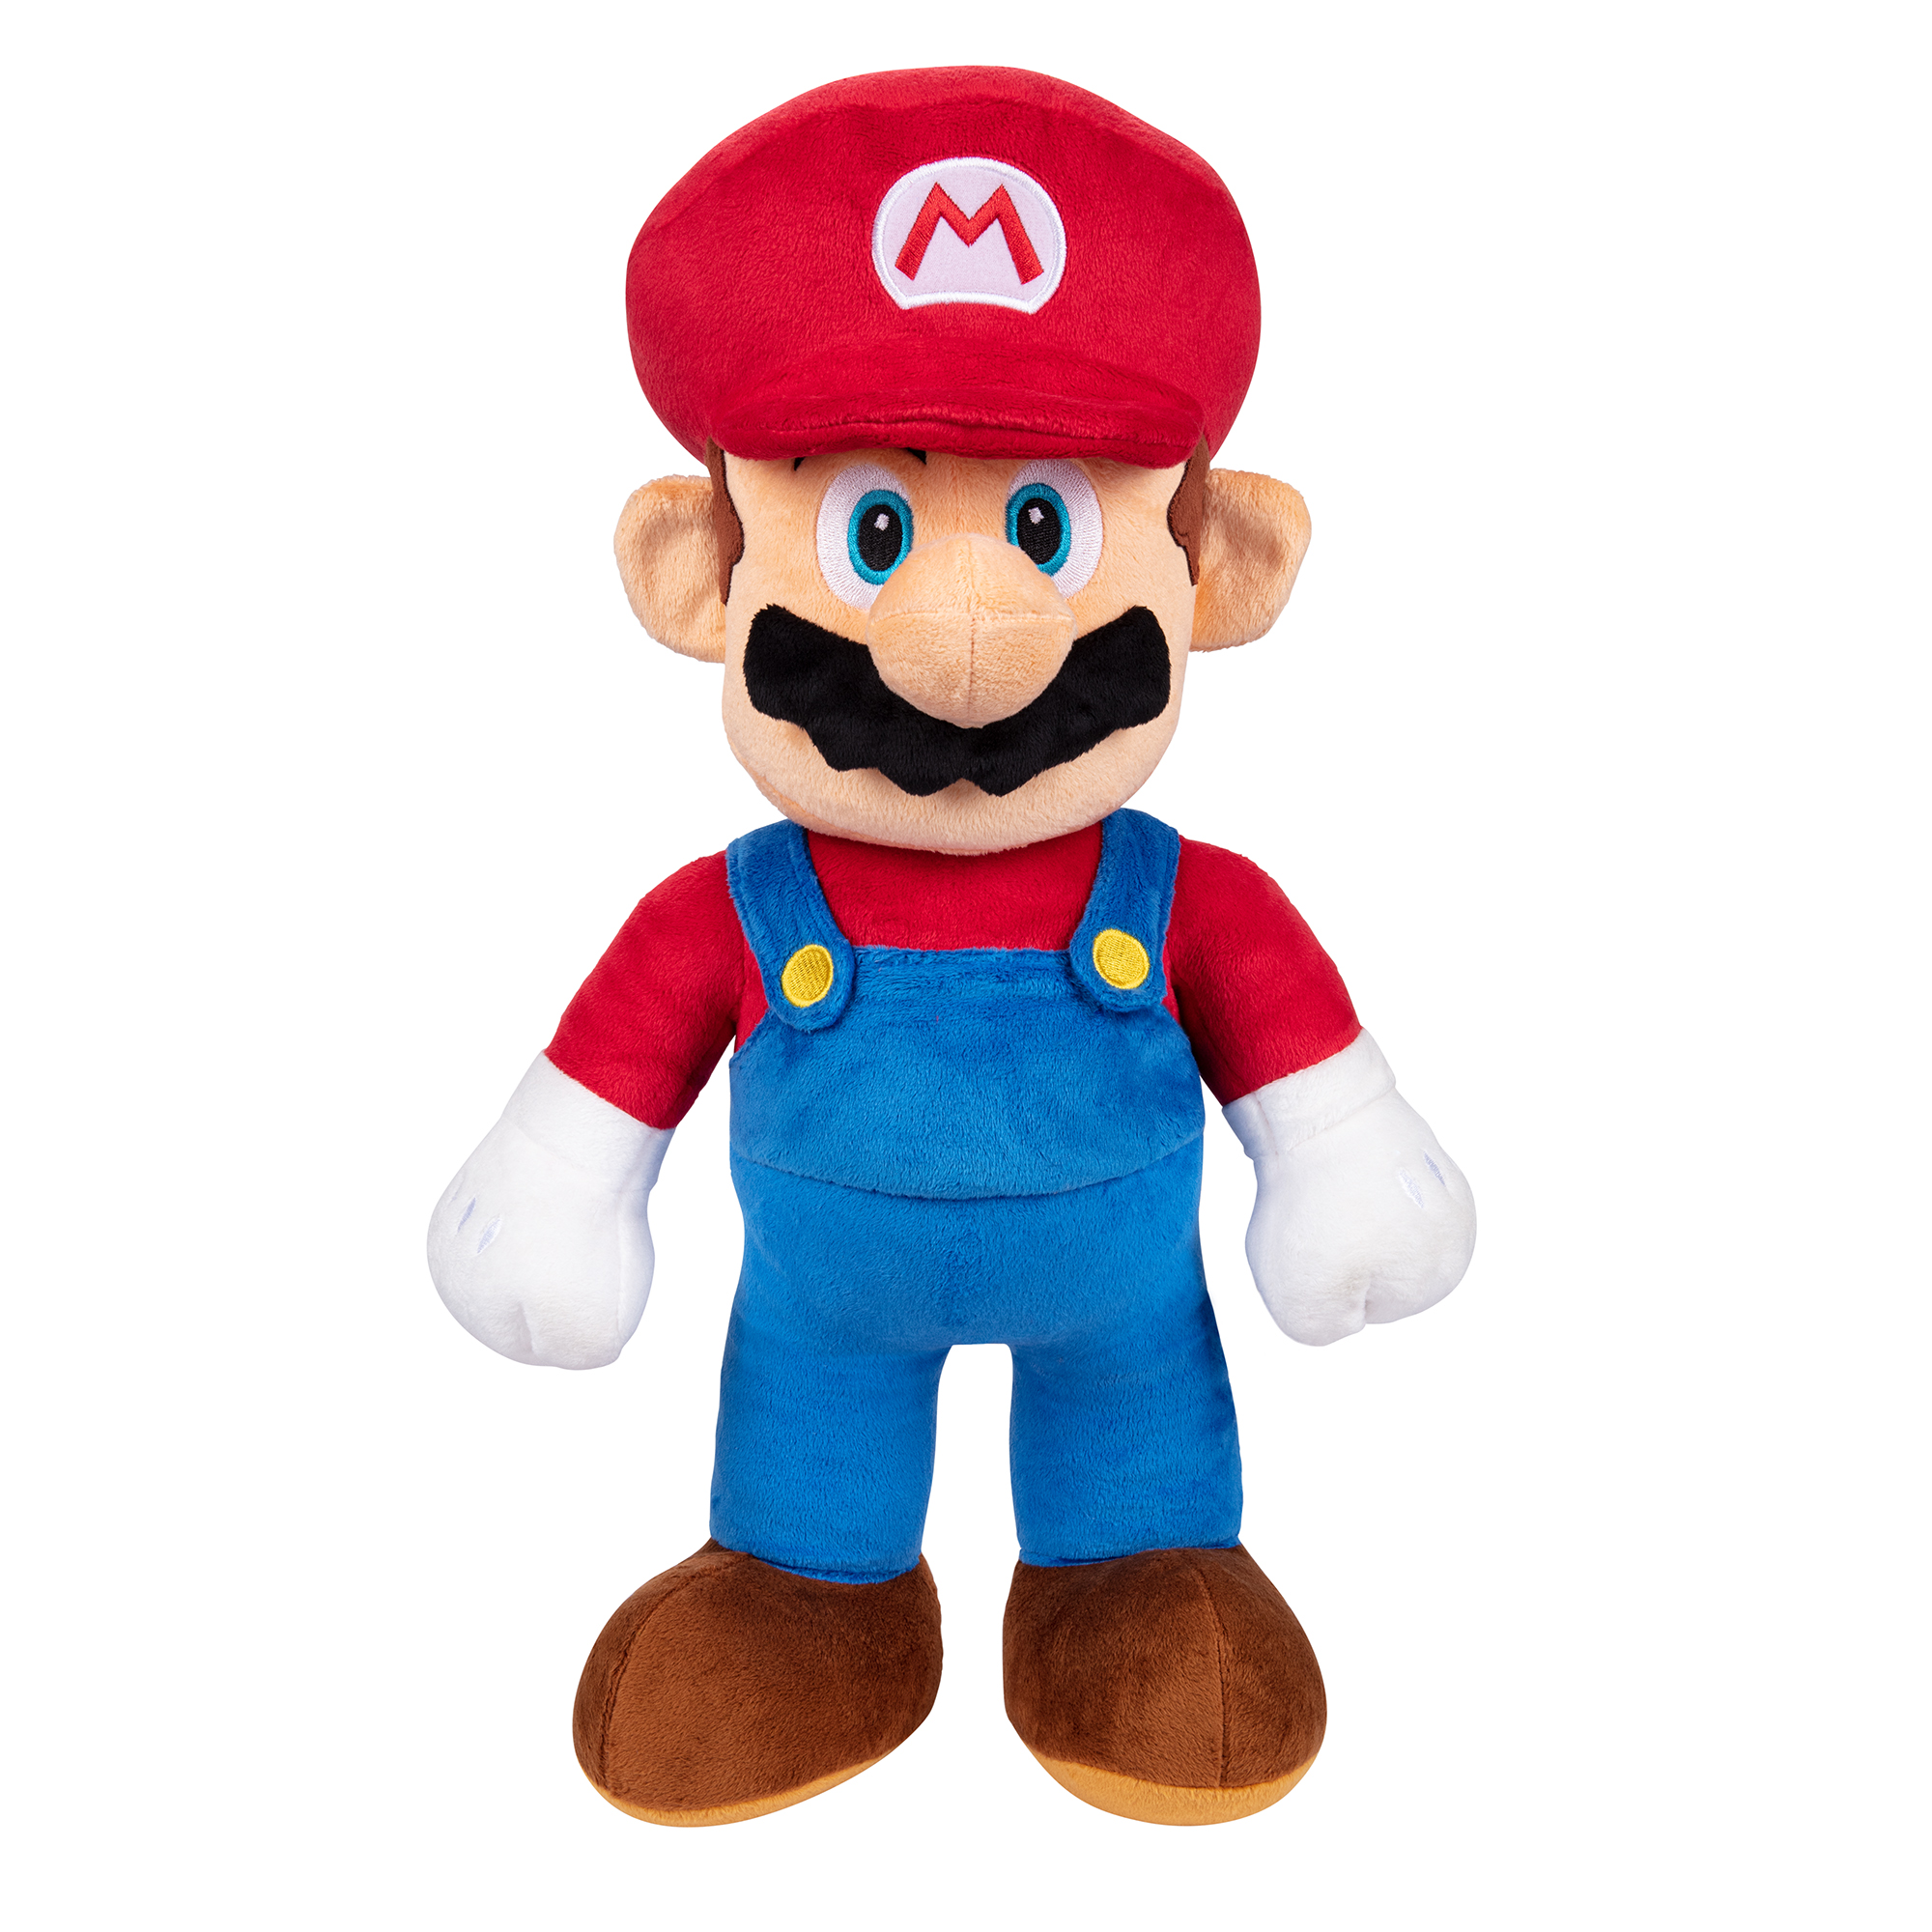 Super Mario Jumbo Mario Plush